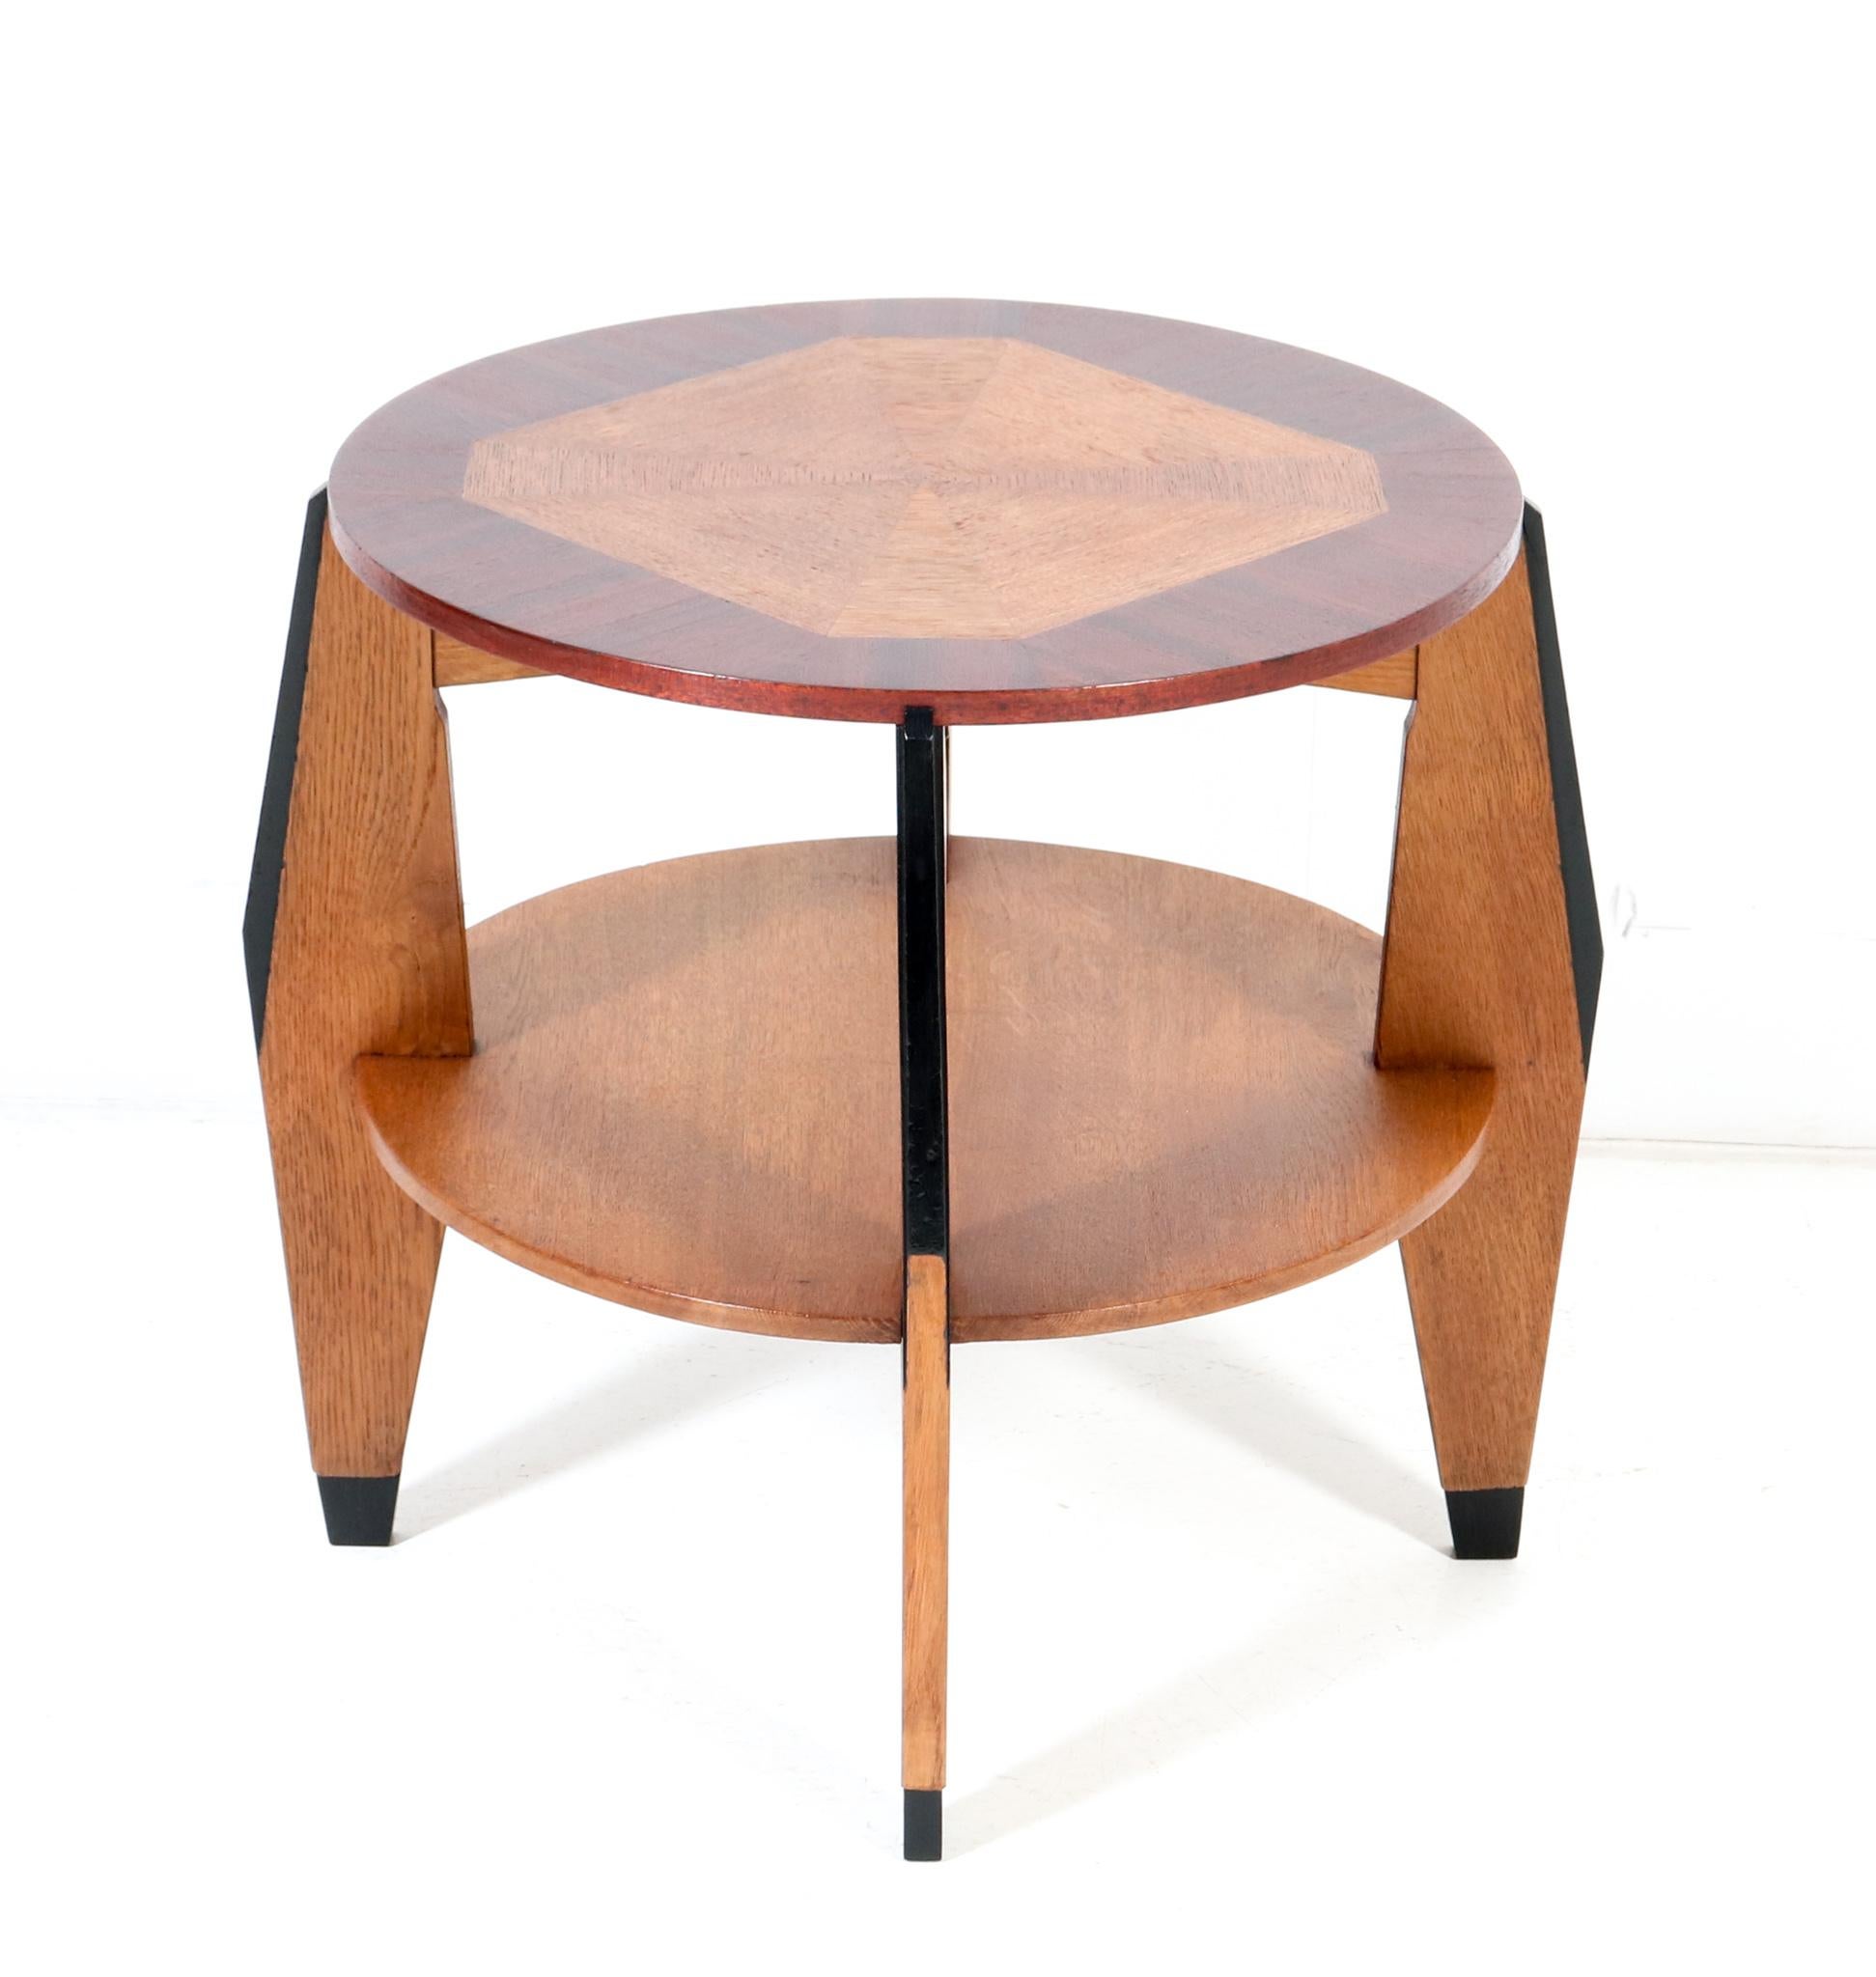 Early 20th Century Oak Art Deco Modernist Side Table by P.E.L. Izeren for De Genneper Molen, 1920s For Sale